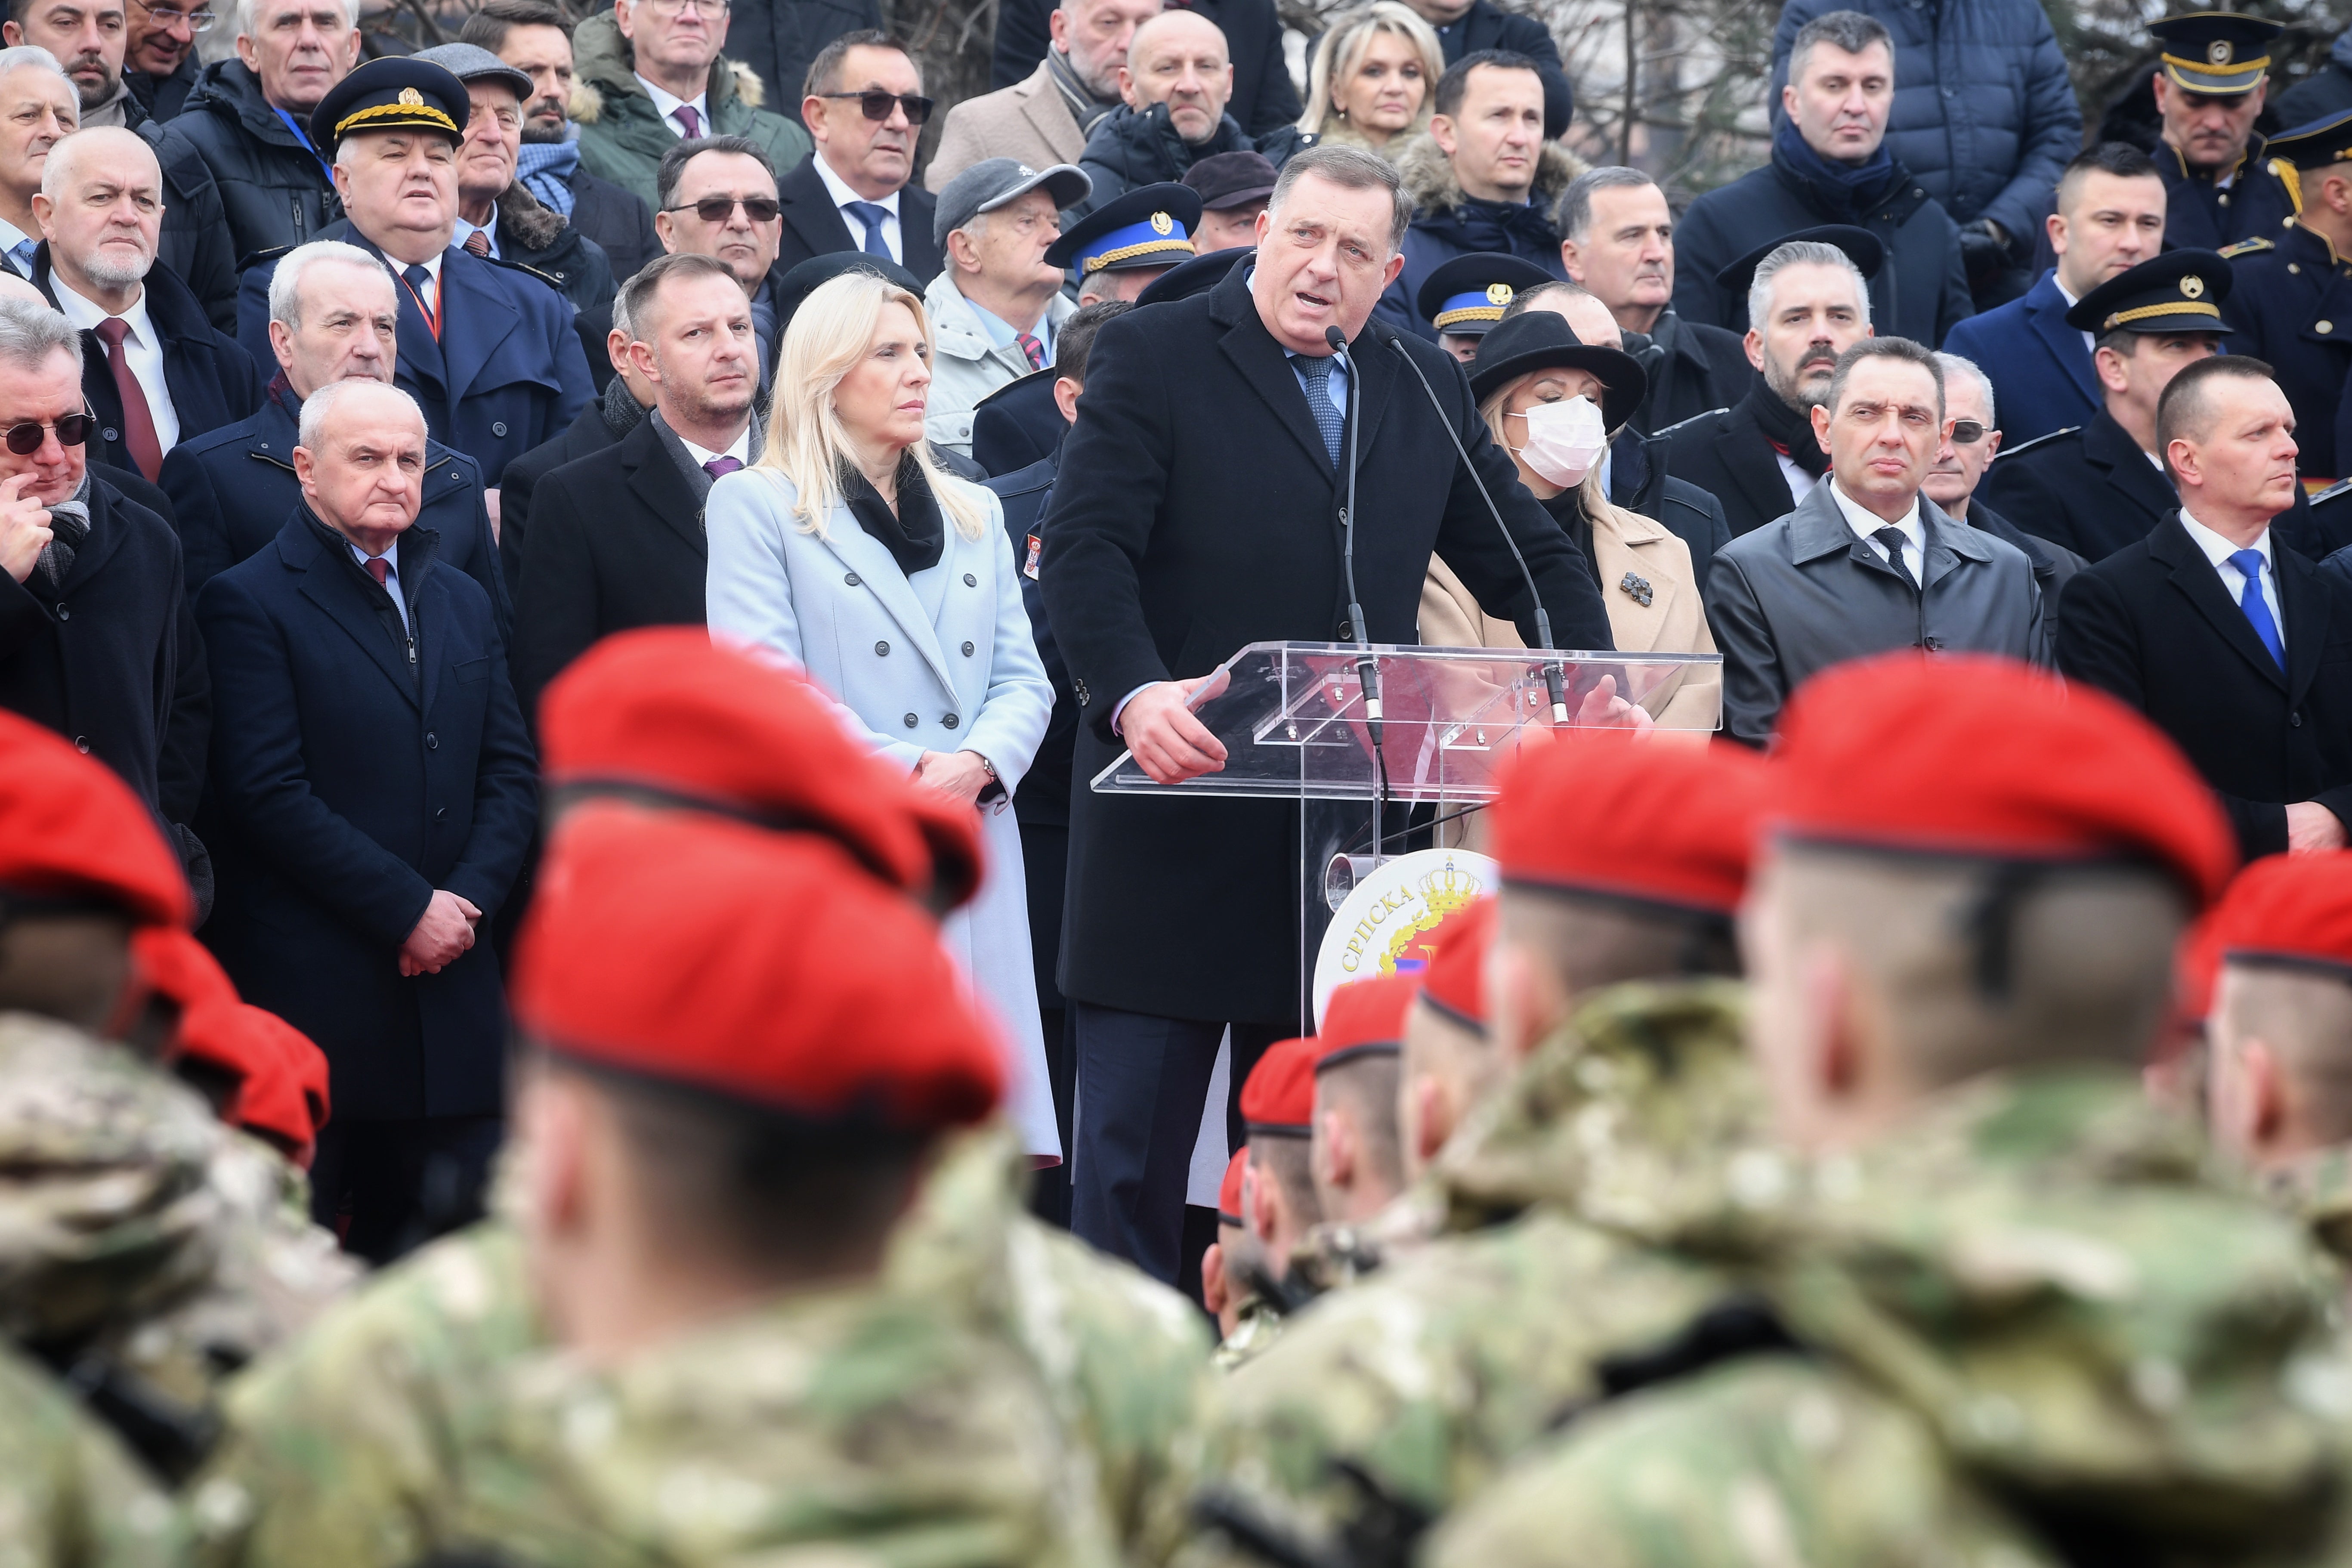 Bosnia’s member of the tripartite presidency, Milorad Dodik, delivers a speech during parade celebrations to mark the autonomous Serb Republic’s national holiday, in Banja Luka, Bosnia-Herzegovina